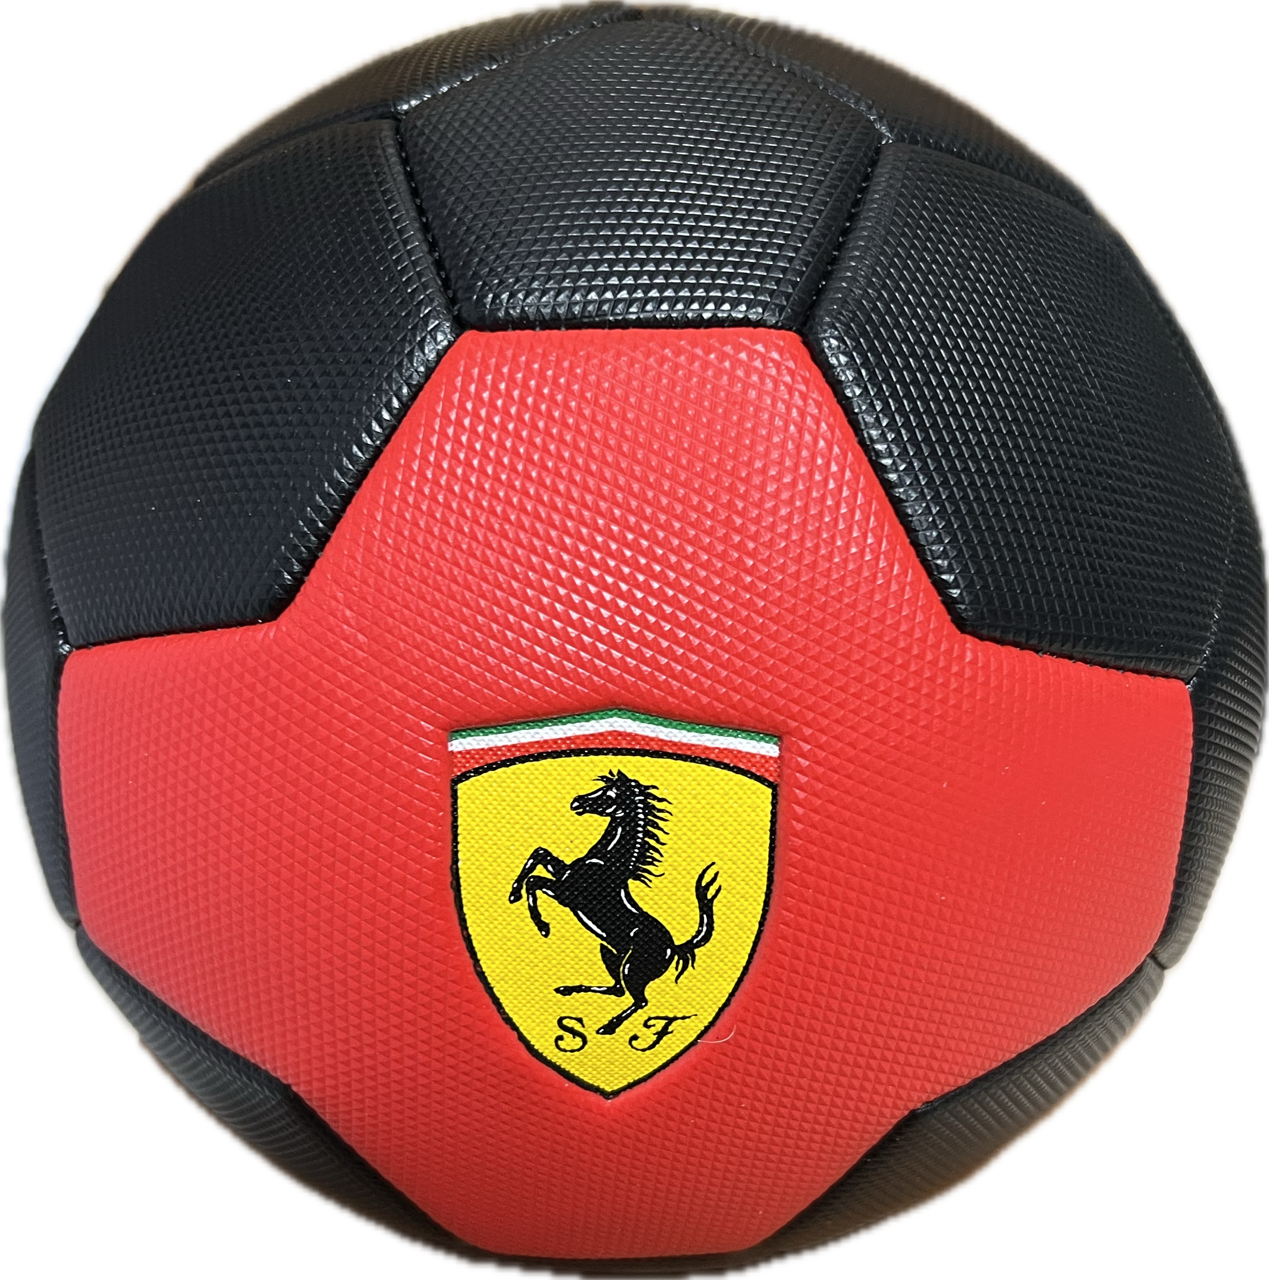 Ferrari Ball - Black with Red Panel